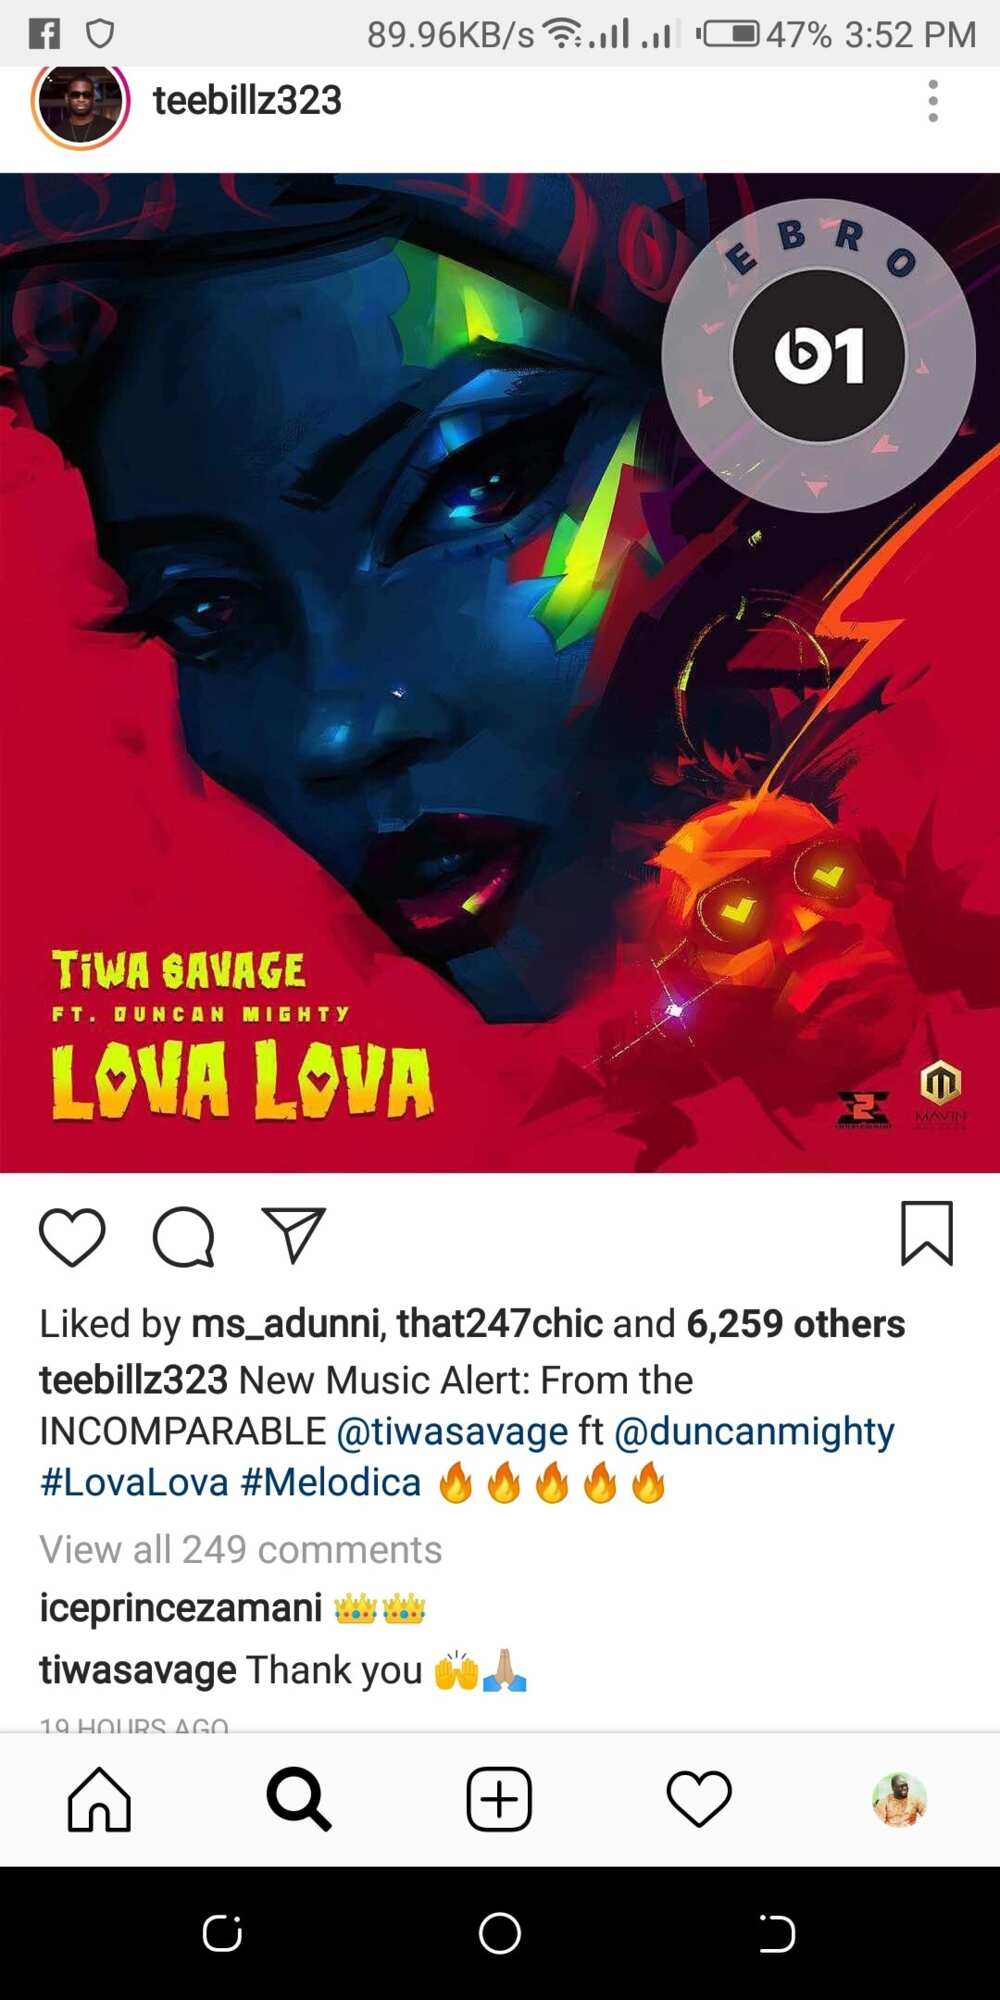 Tiwa Savage's estranged hubby Teebillz promotes her new song, she replies